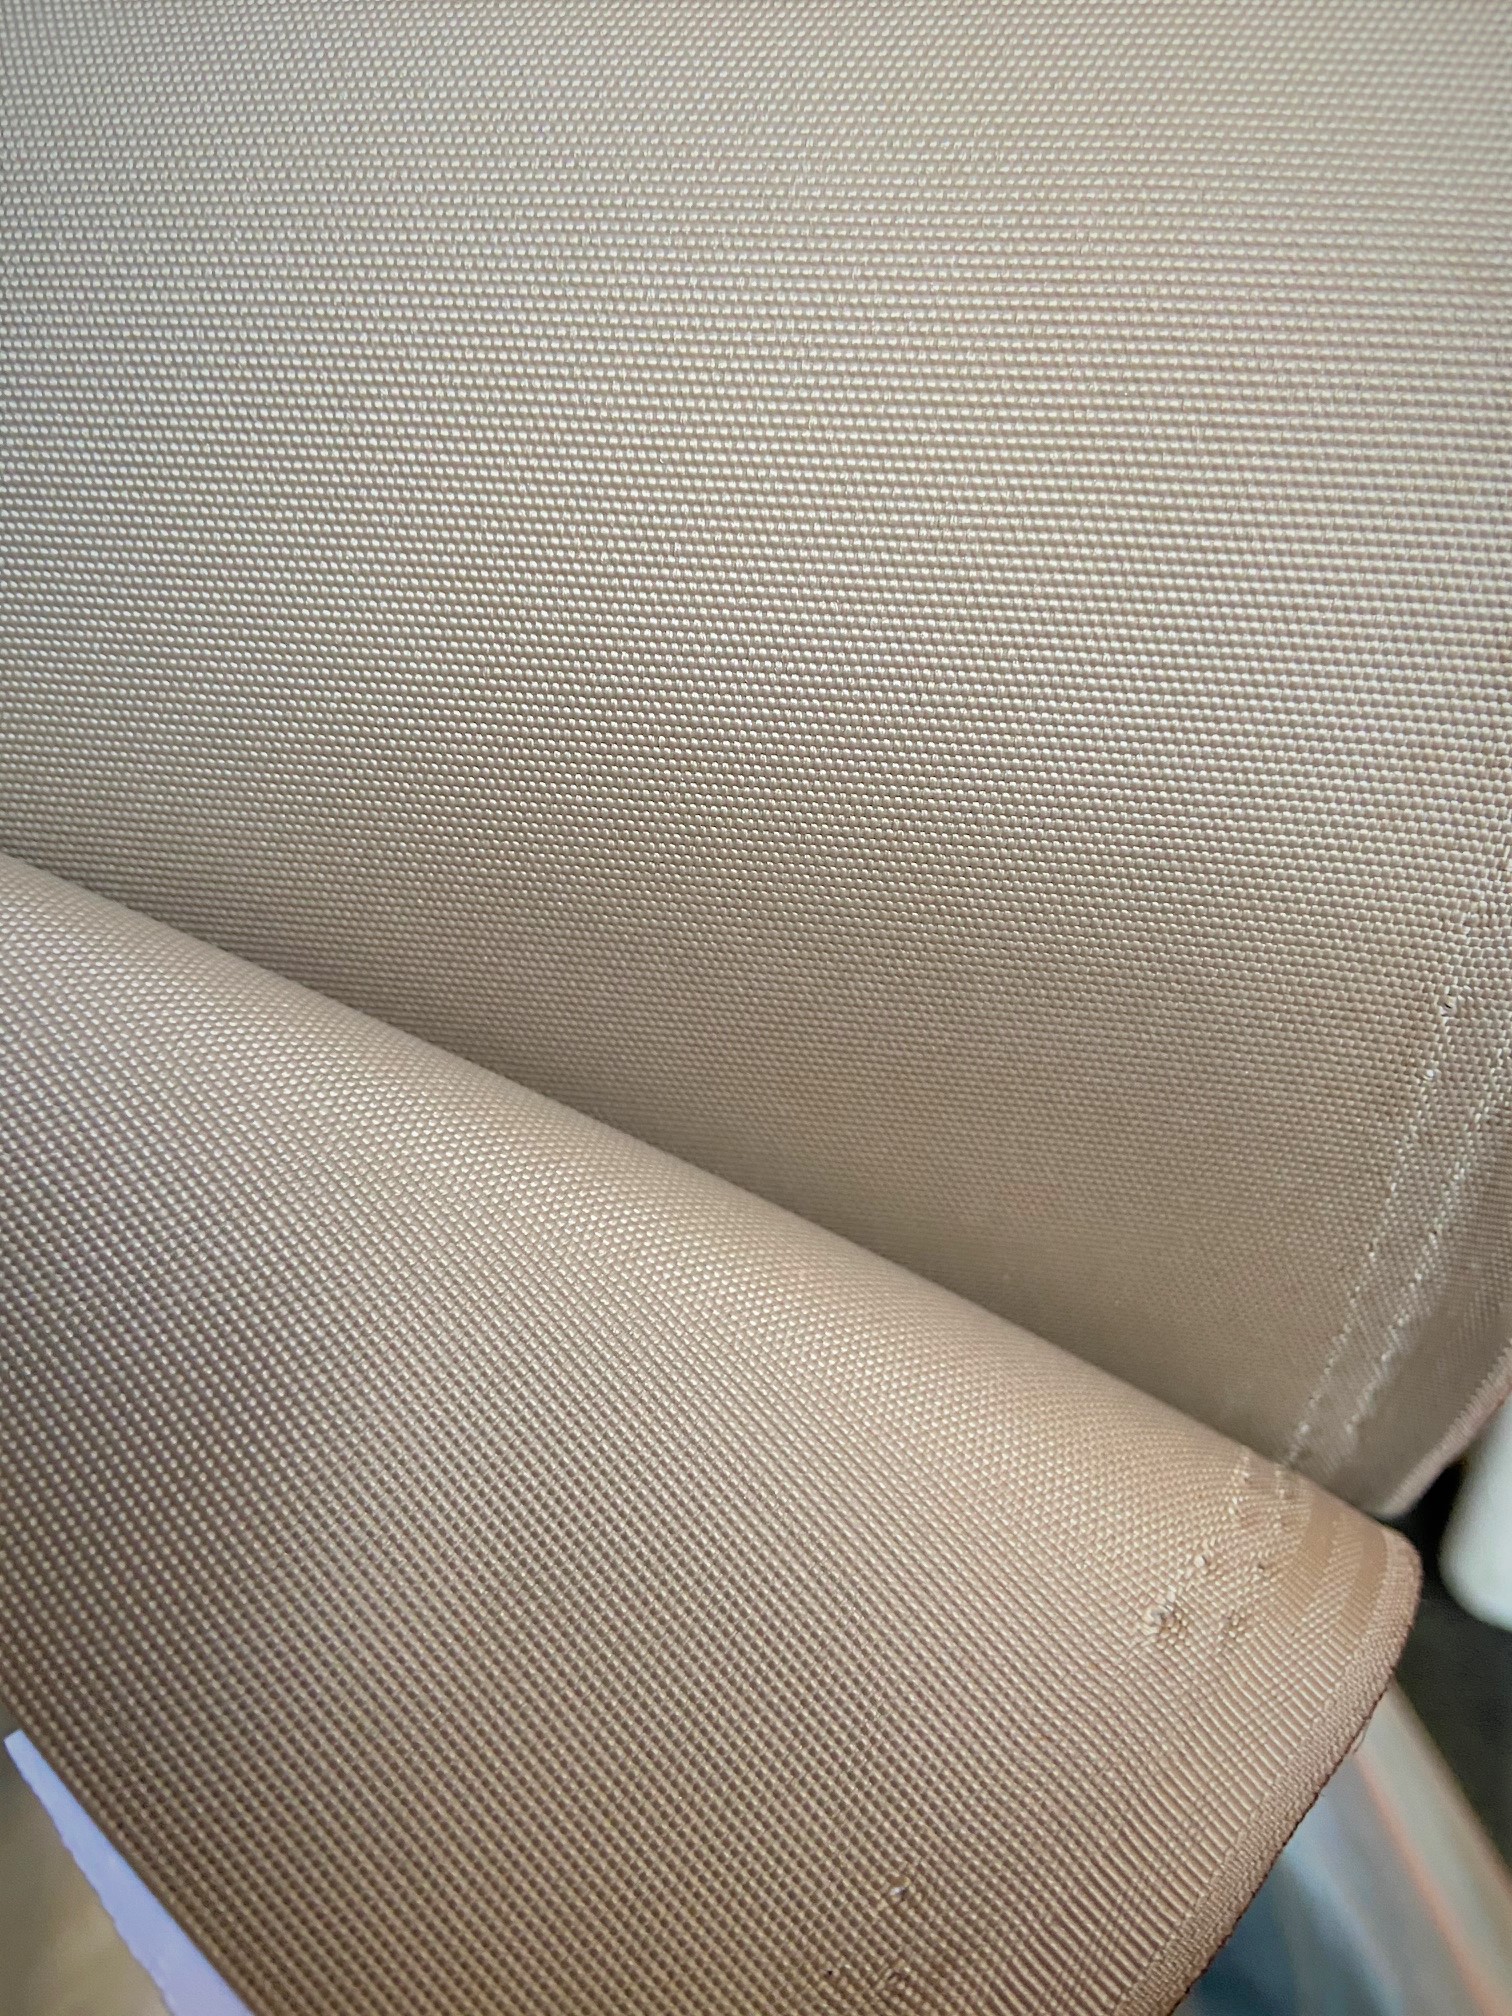 Kondor Fabric, weight 287g/m², width 150cm, beige colour. Price per meter, 21% VAT incl. 